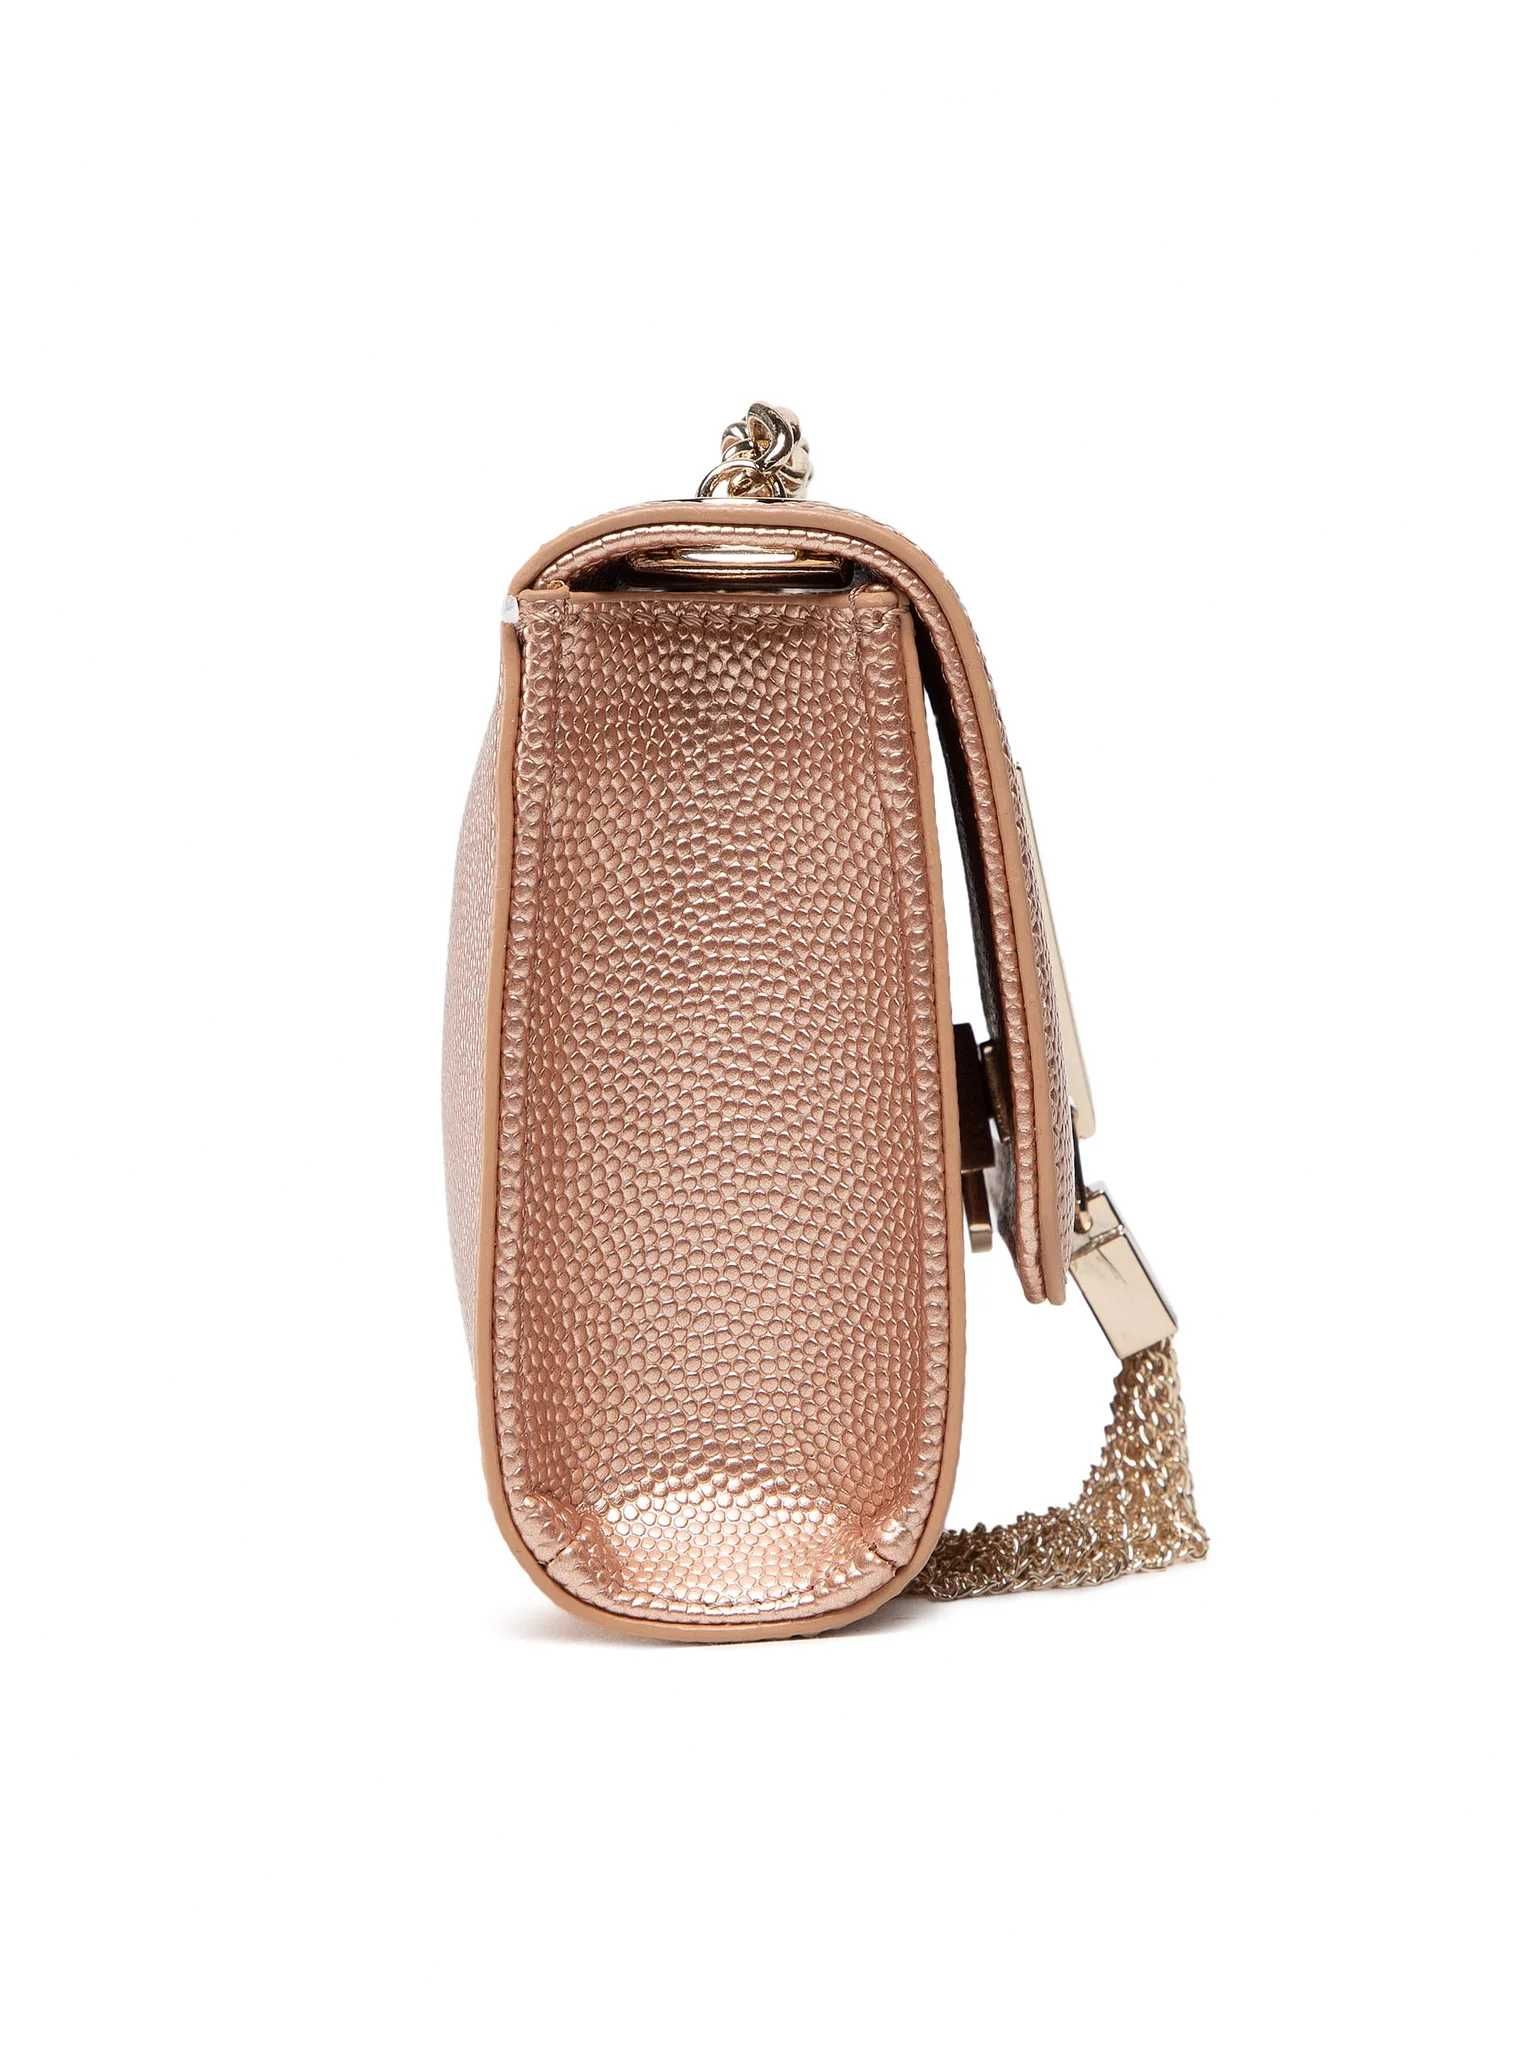 Дамска чанта VALENTINO - розова, чисто нова, оригинал, уникат!